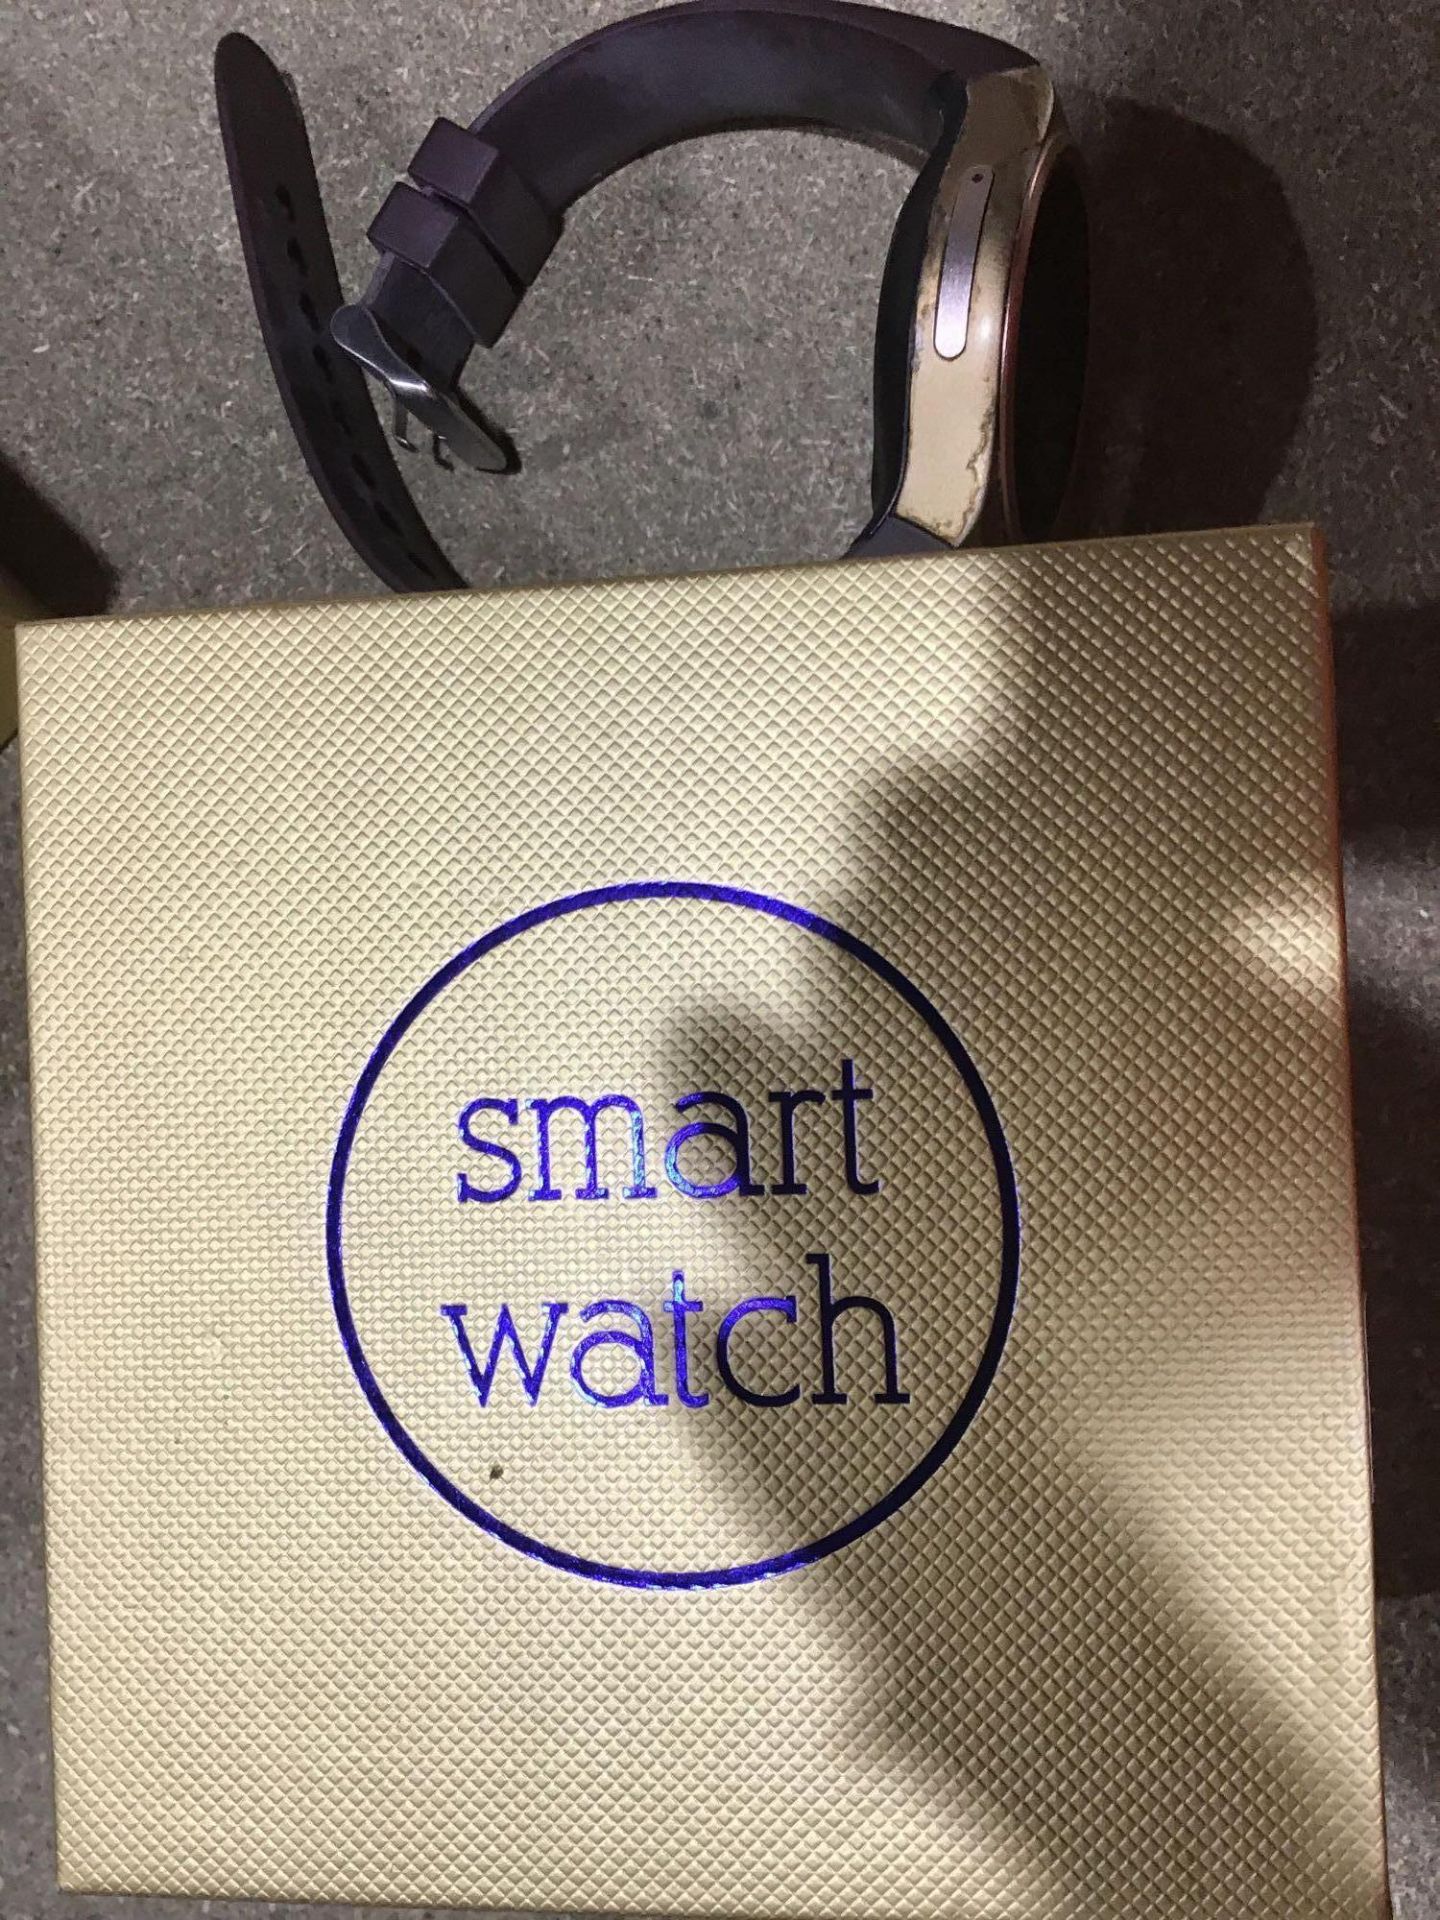 Smart Watch - Image 2 of 3